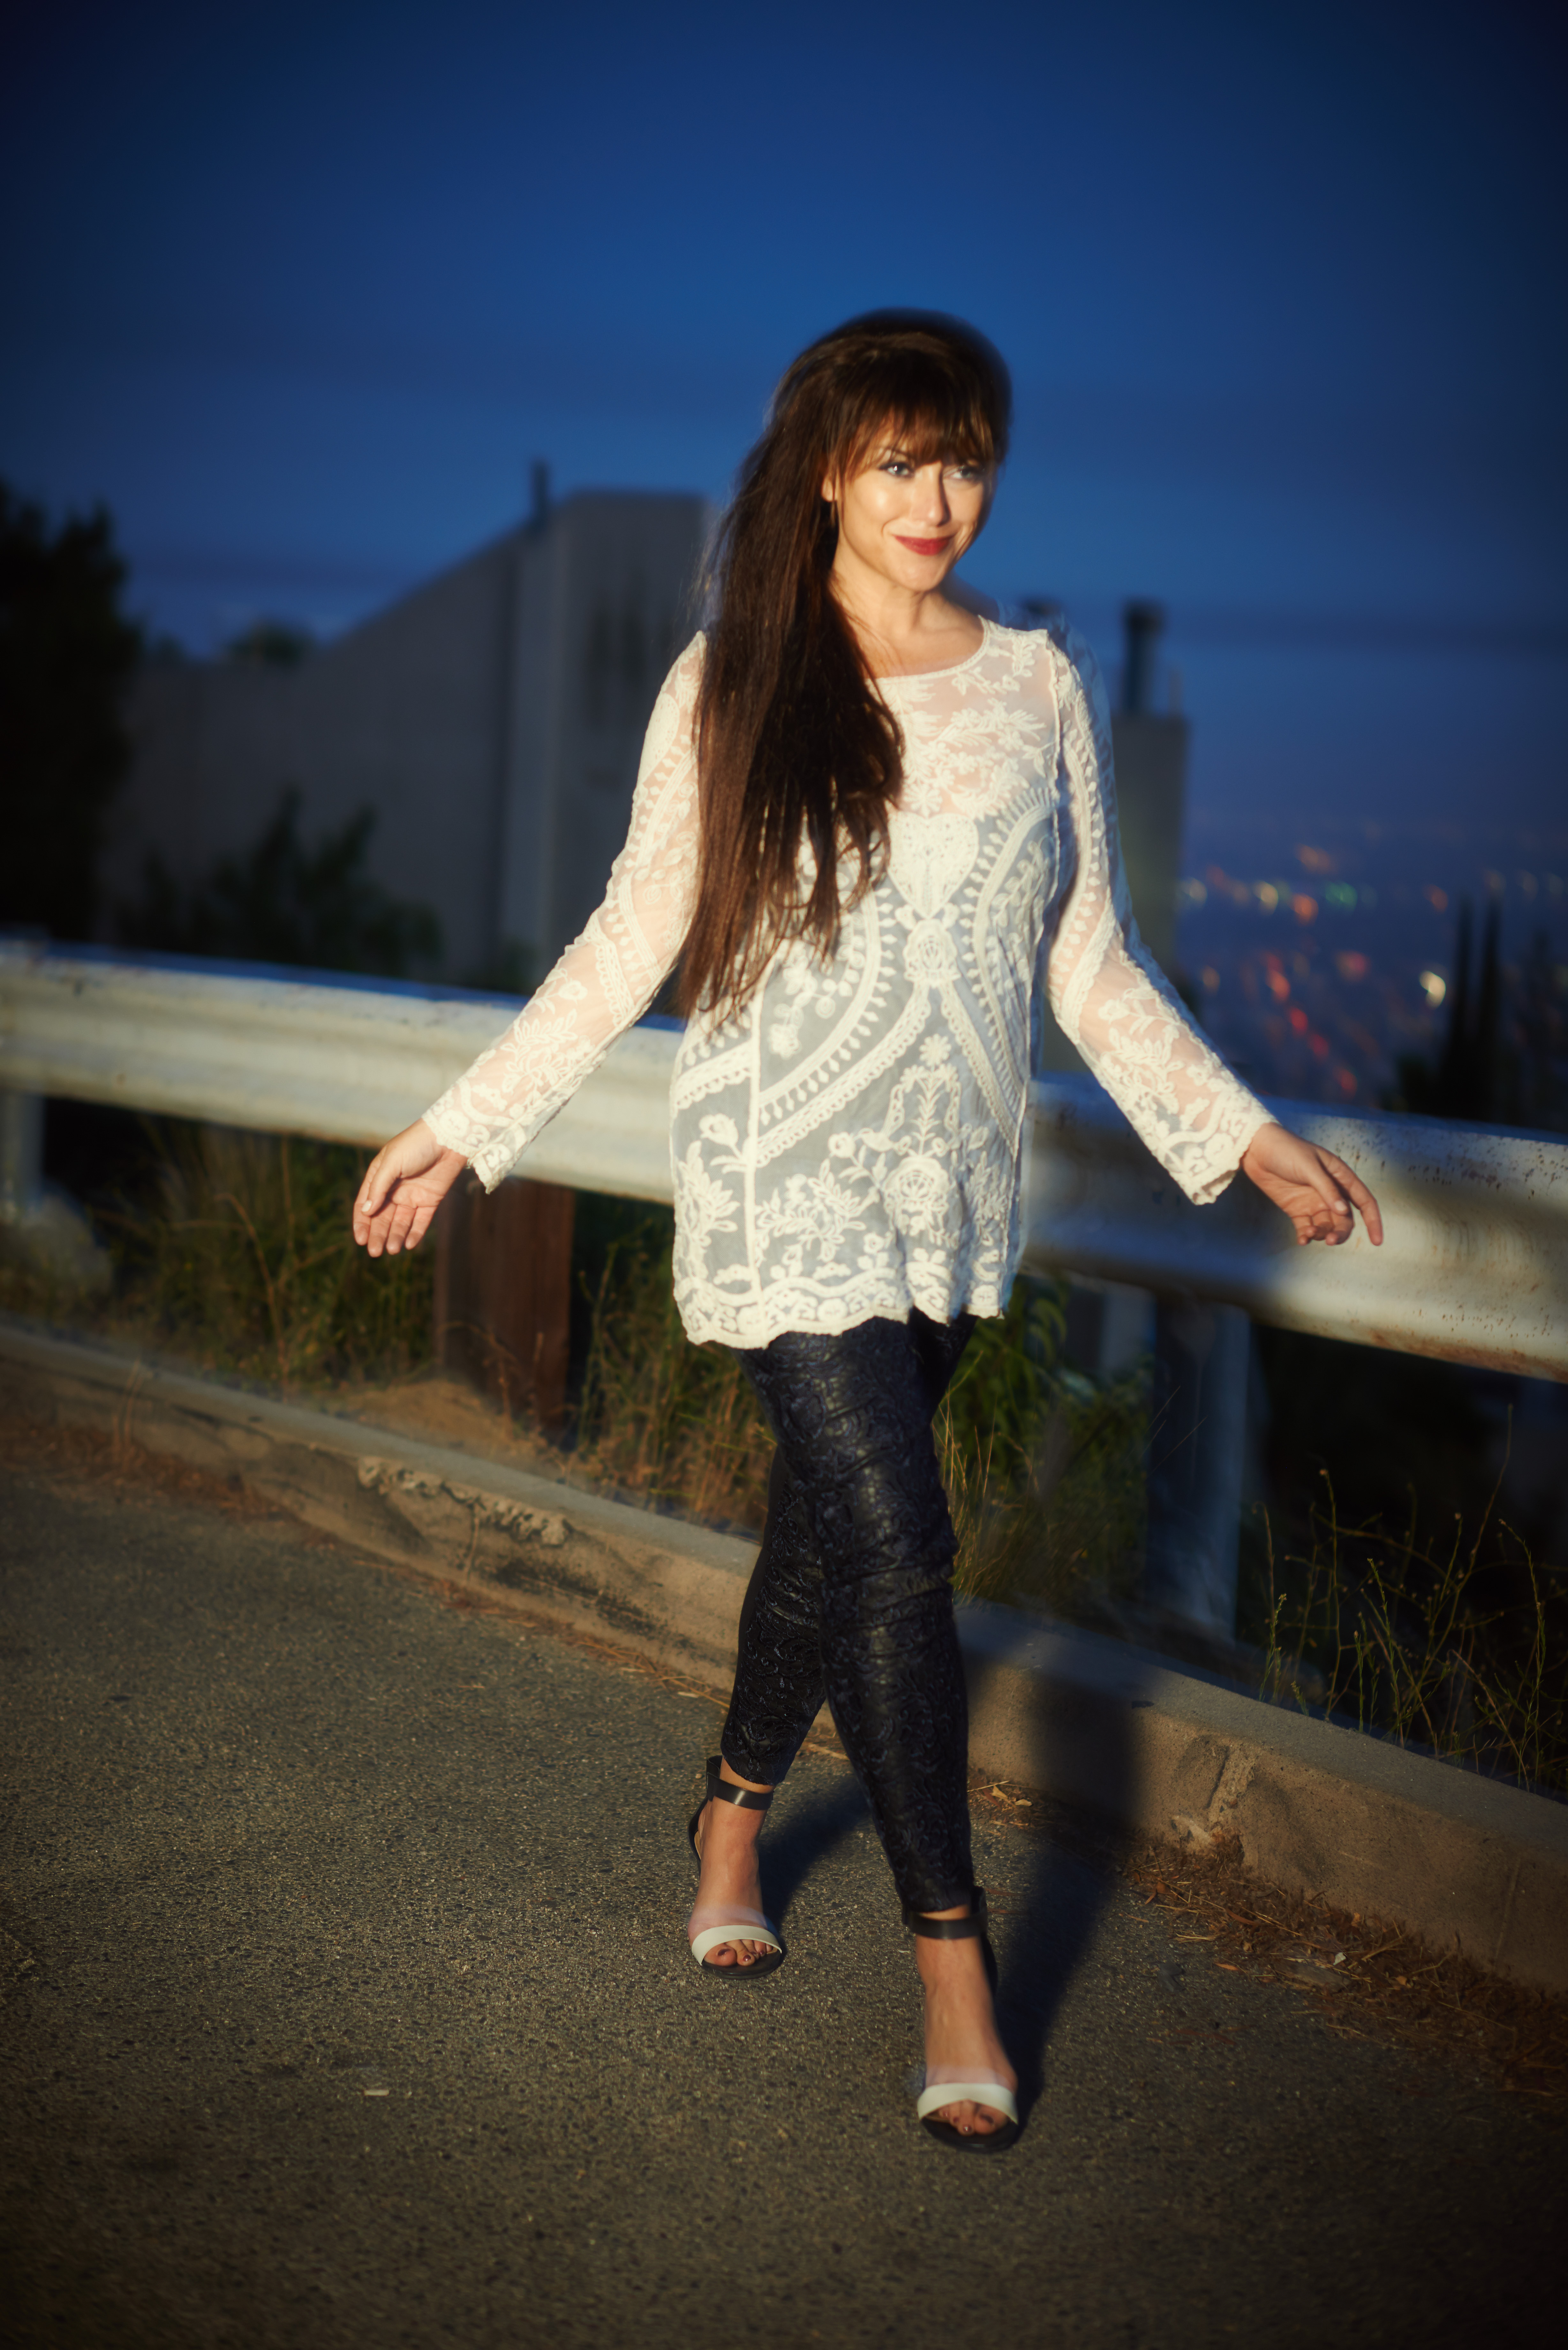 Kali Nolen Singer/Actress/Model Michael Becker Night Shoot, Hollywood Hills 2014 May